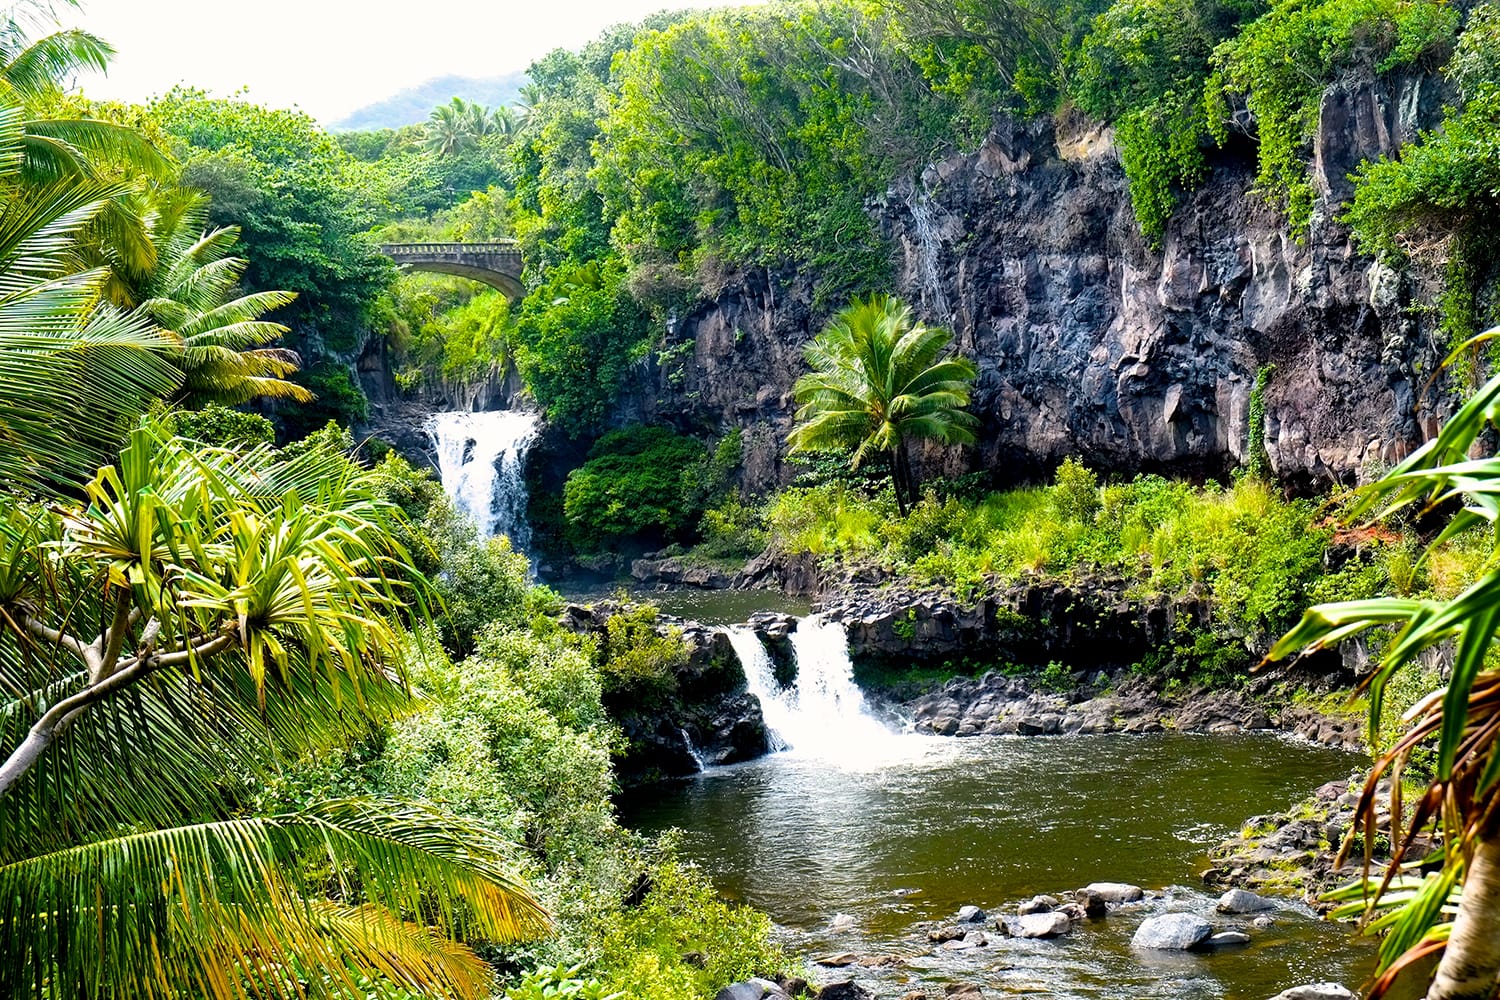 'Ohe'o Gulch (Seven Sacred Pools) in Maui, Hawaii